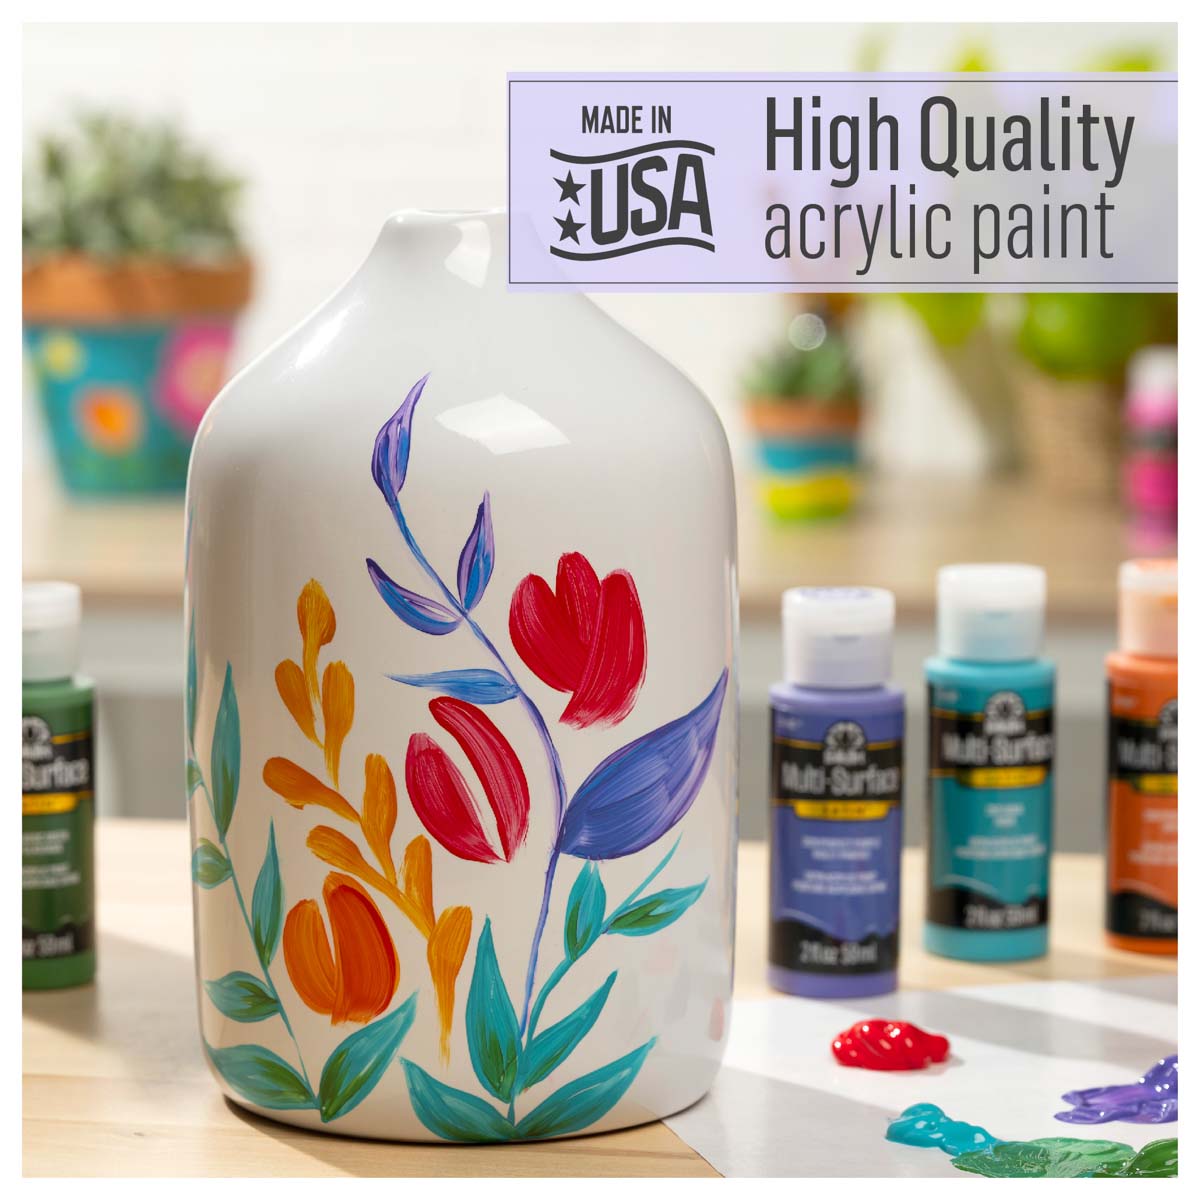 FolkArt ® Multi-Surface Satin Acrylic Paints - Wicker White, 2 oz. - 2894